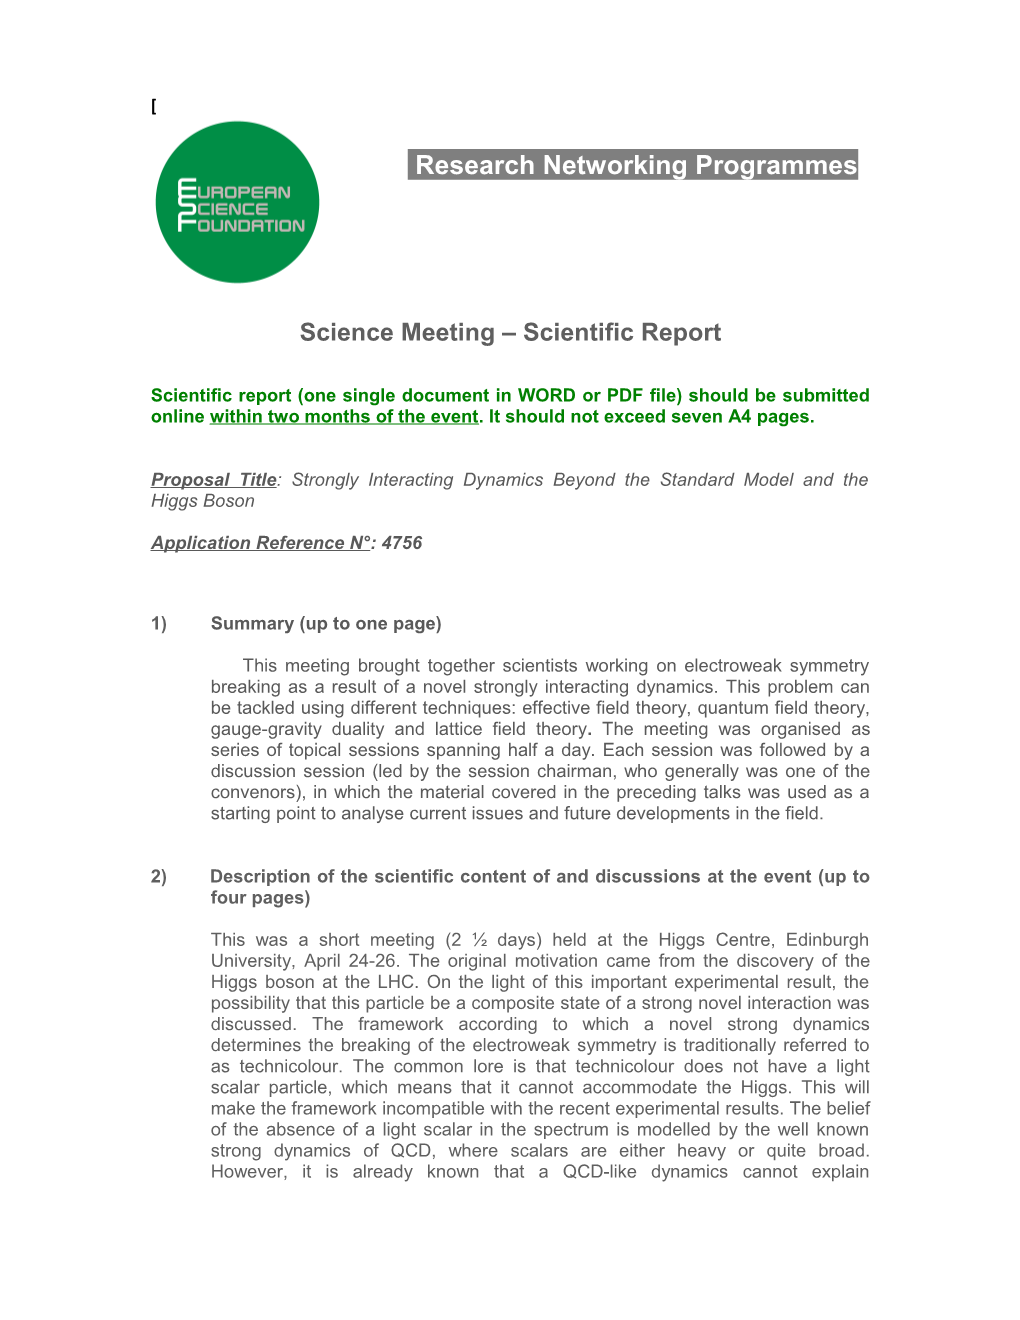 Science Meeting Scientific Report